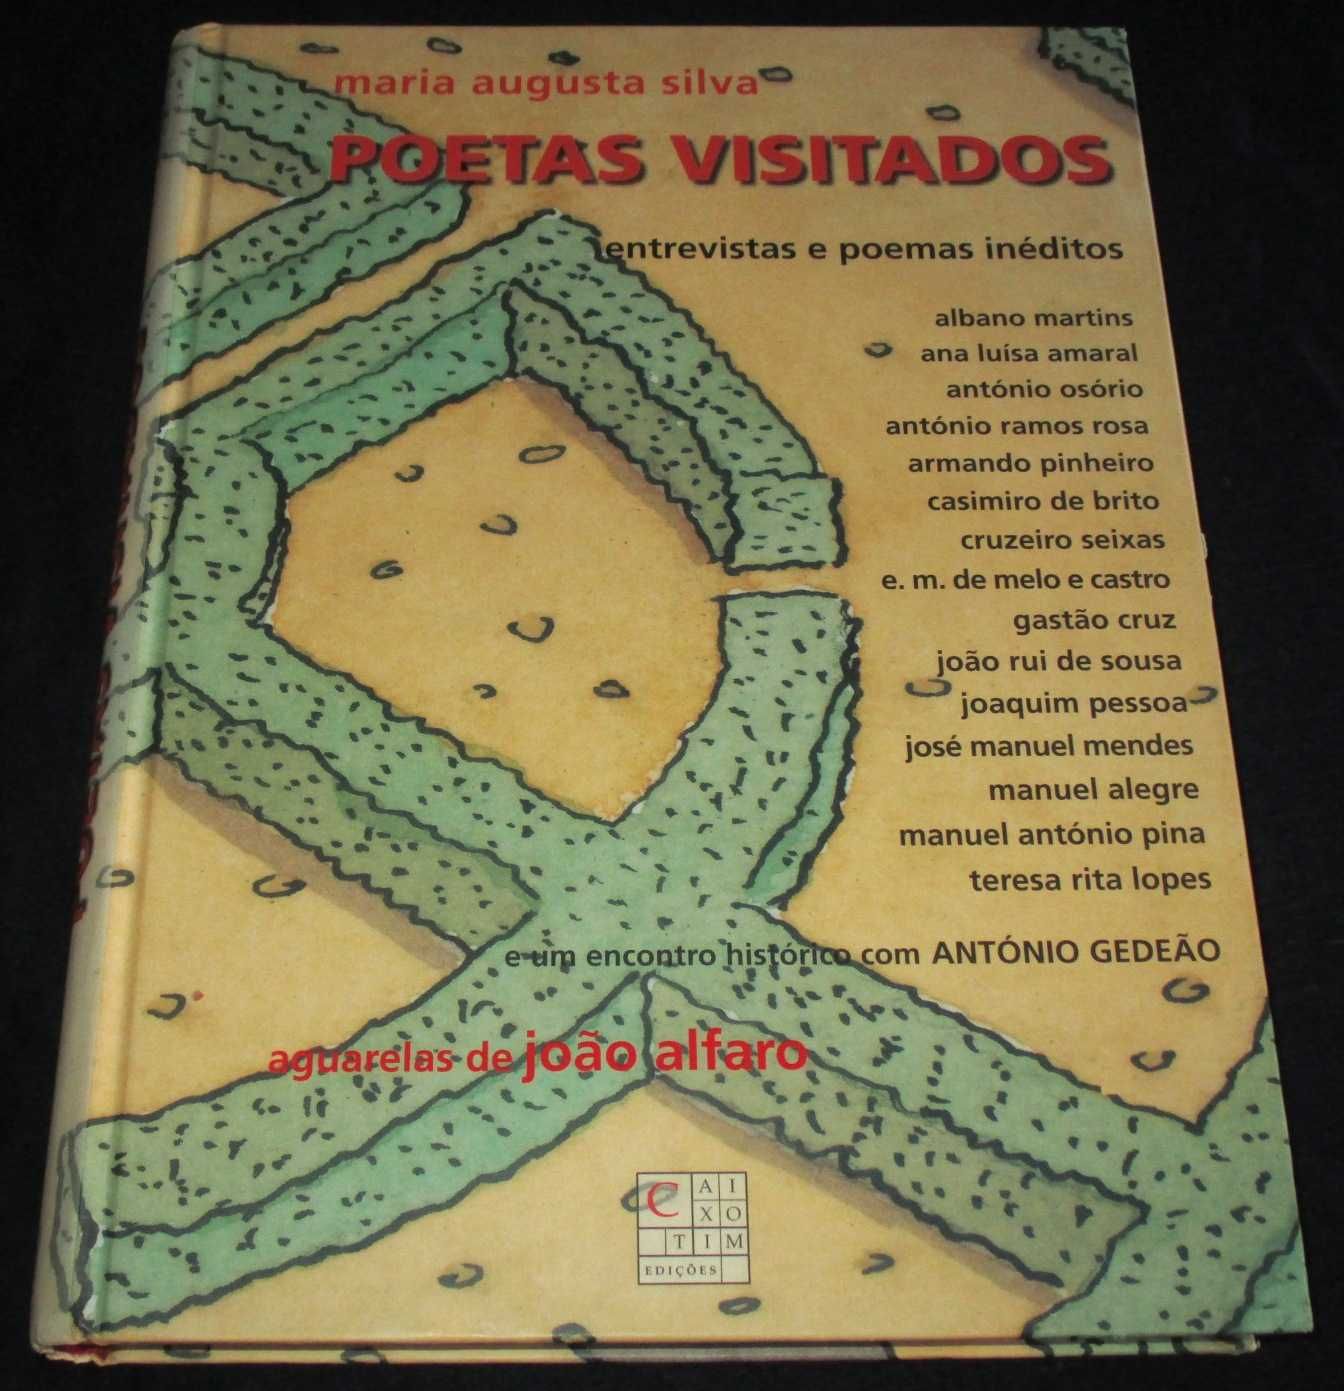 Livro Poetas Visitados entrevistas e poemas inéditos Maria Augusta